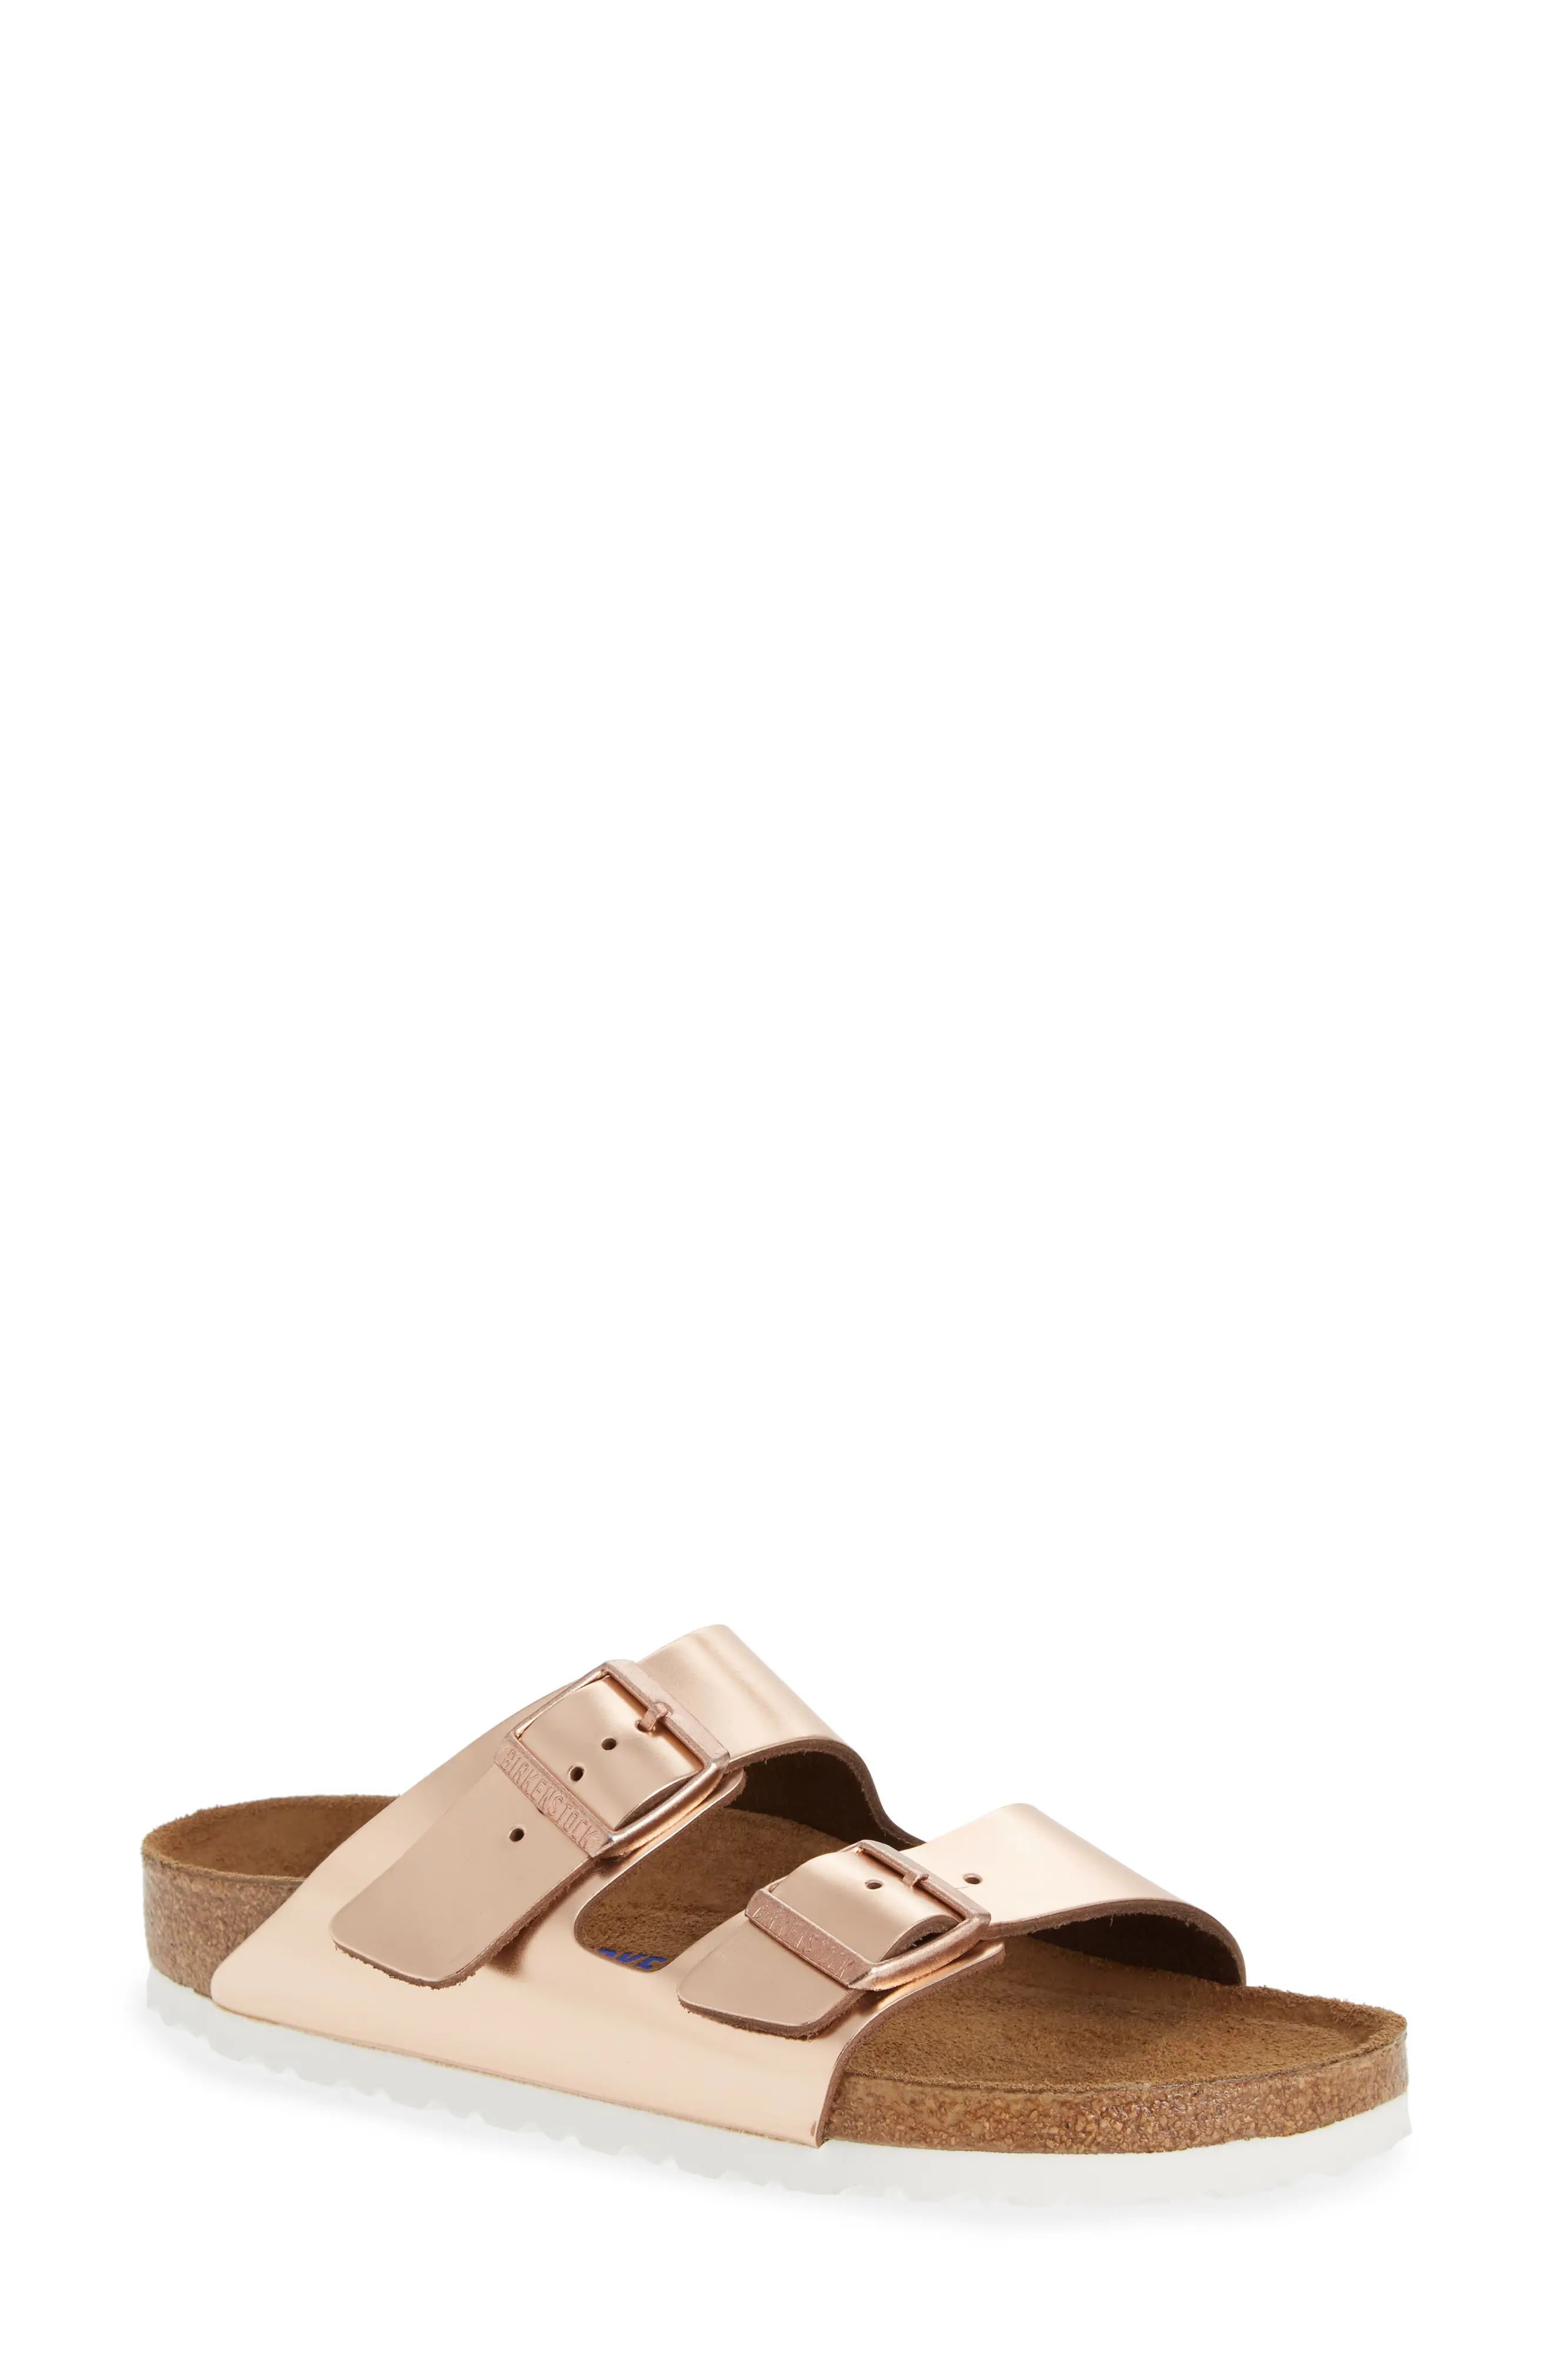 Women's Birkenstock Arizona Soft Footbed Sandal, Size 6-6.5US - Metallic | Nordstrom